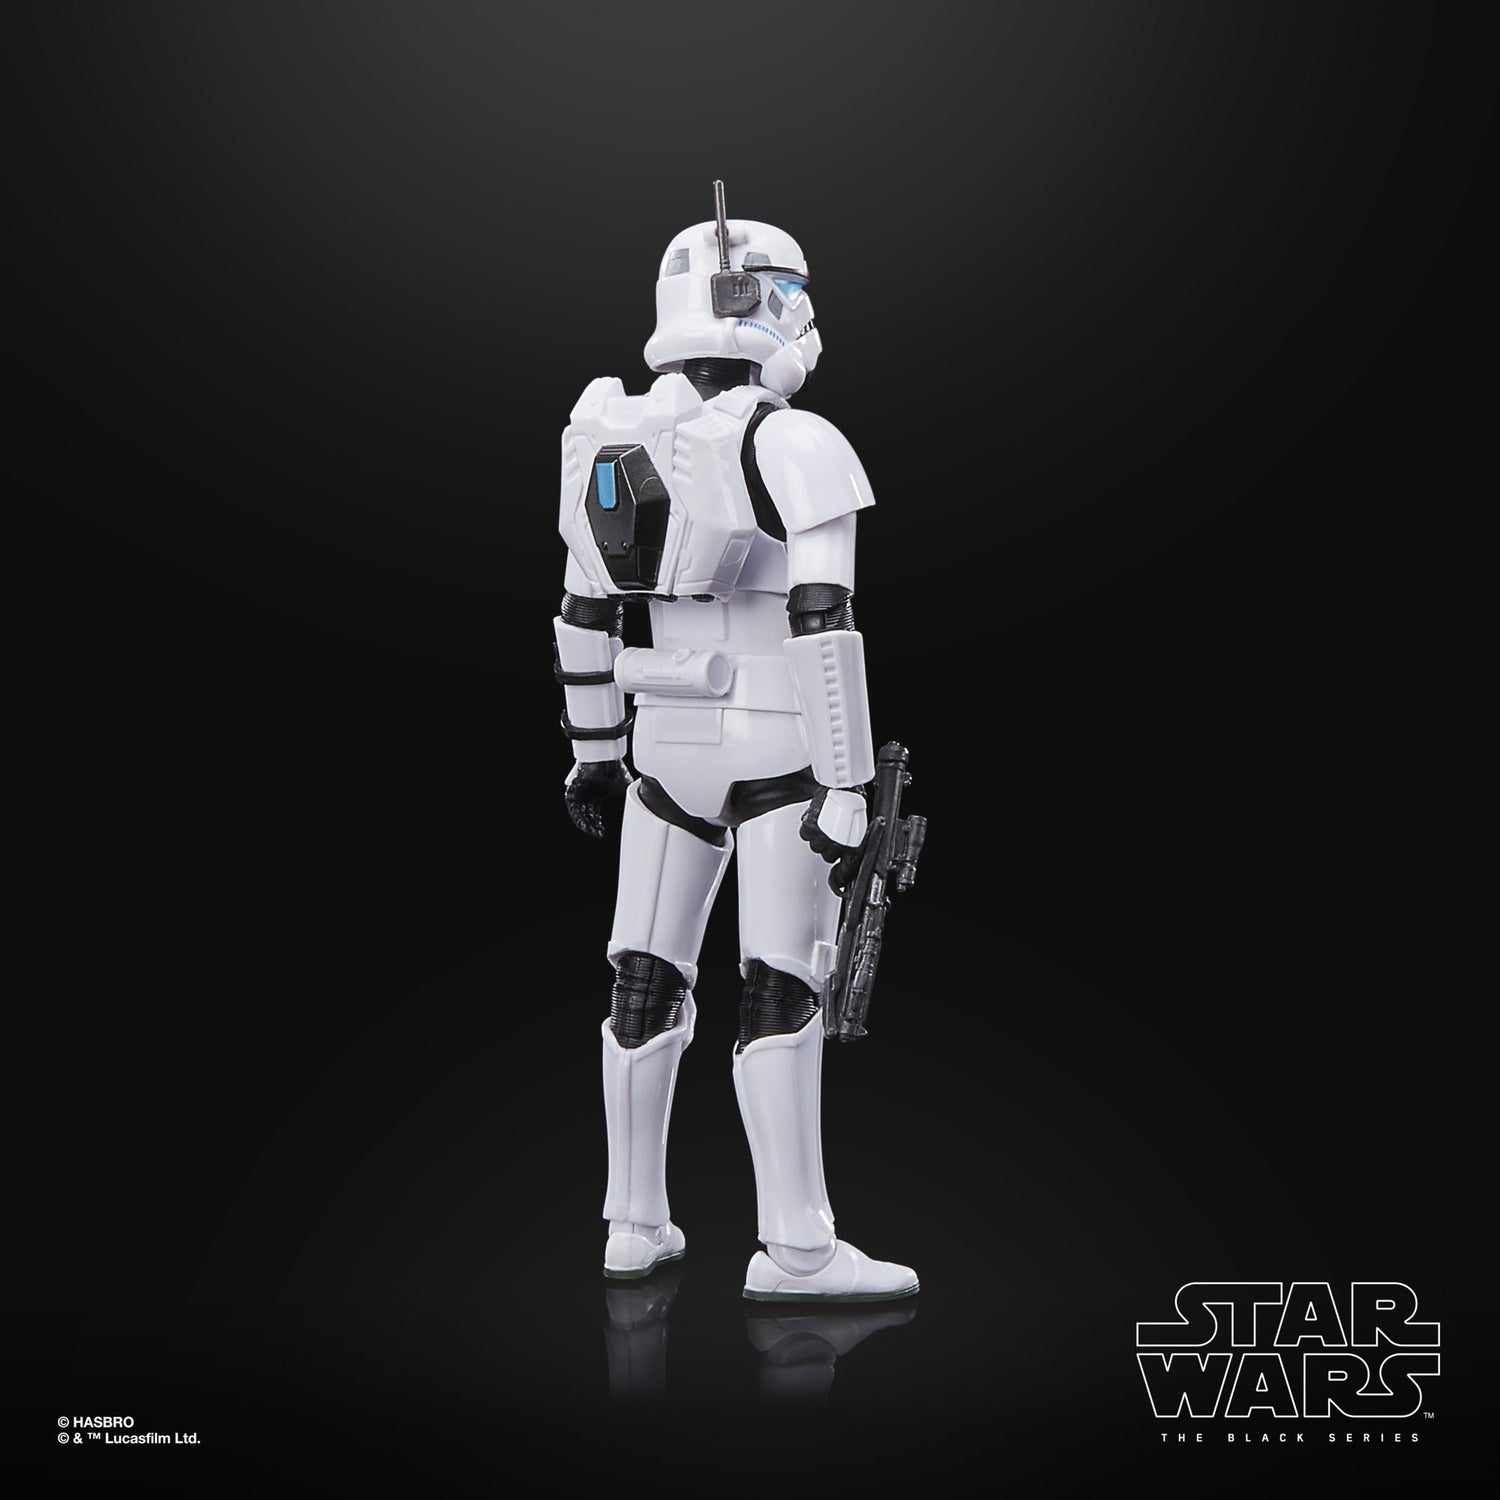 Star Wars: The Black Series SCAR Trooper Mic Hasbro